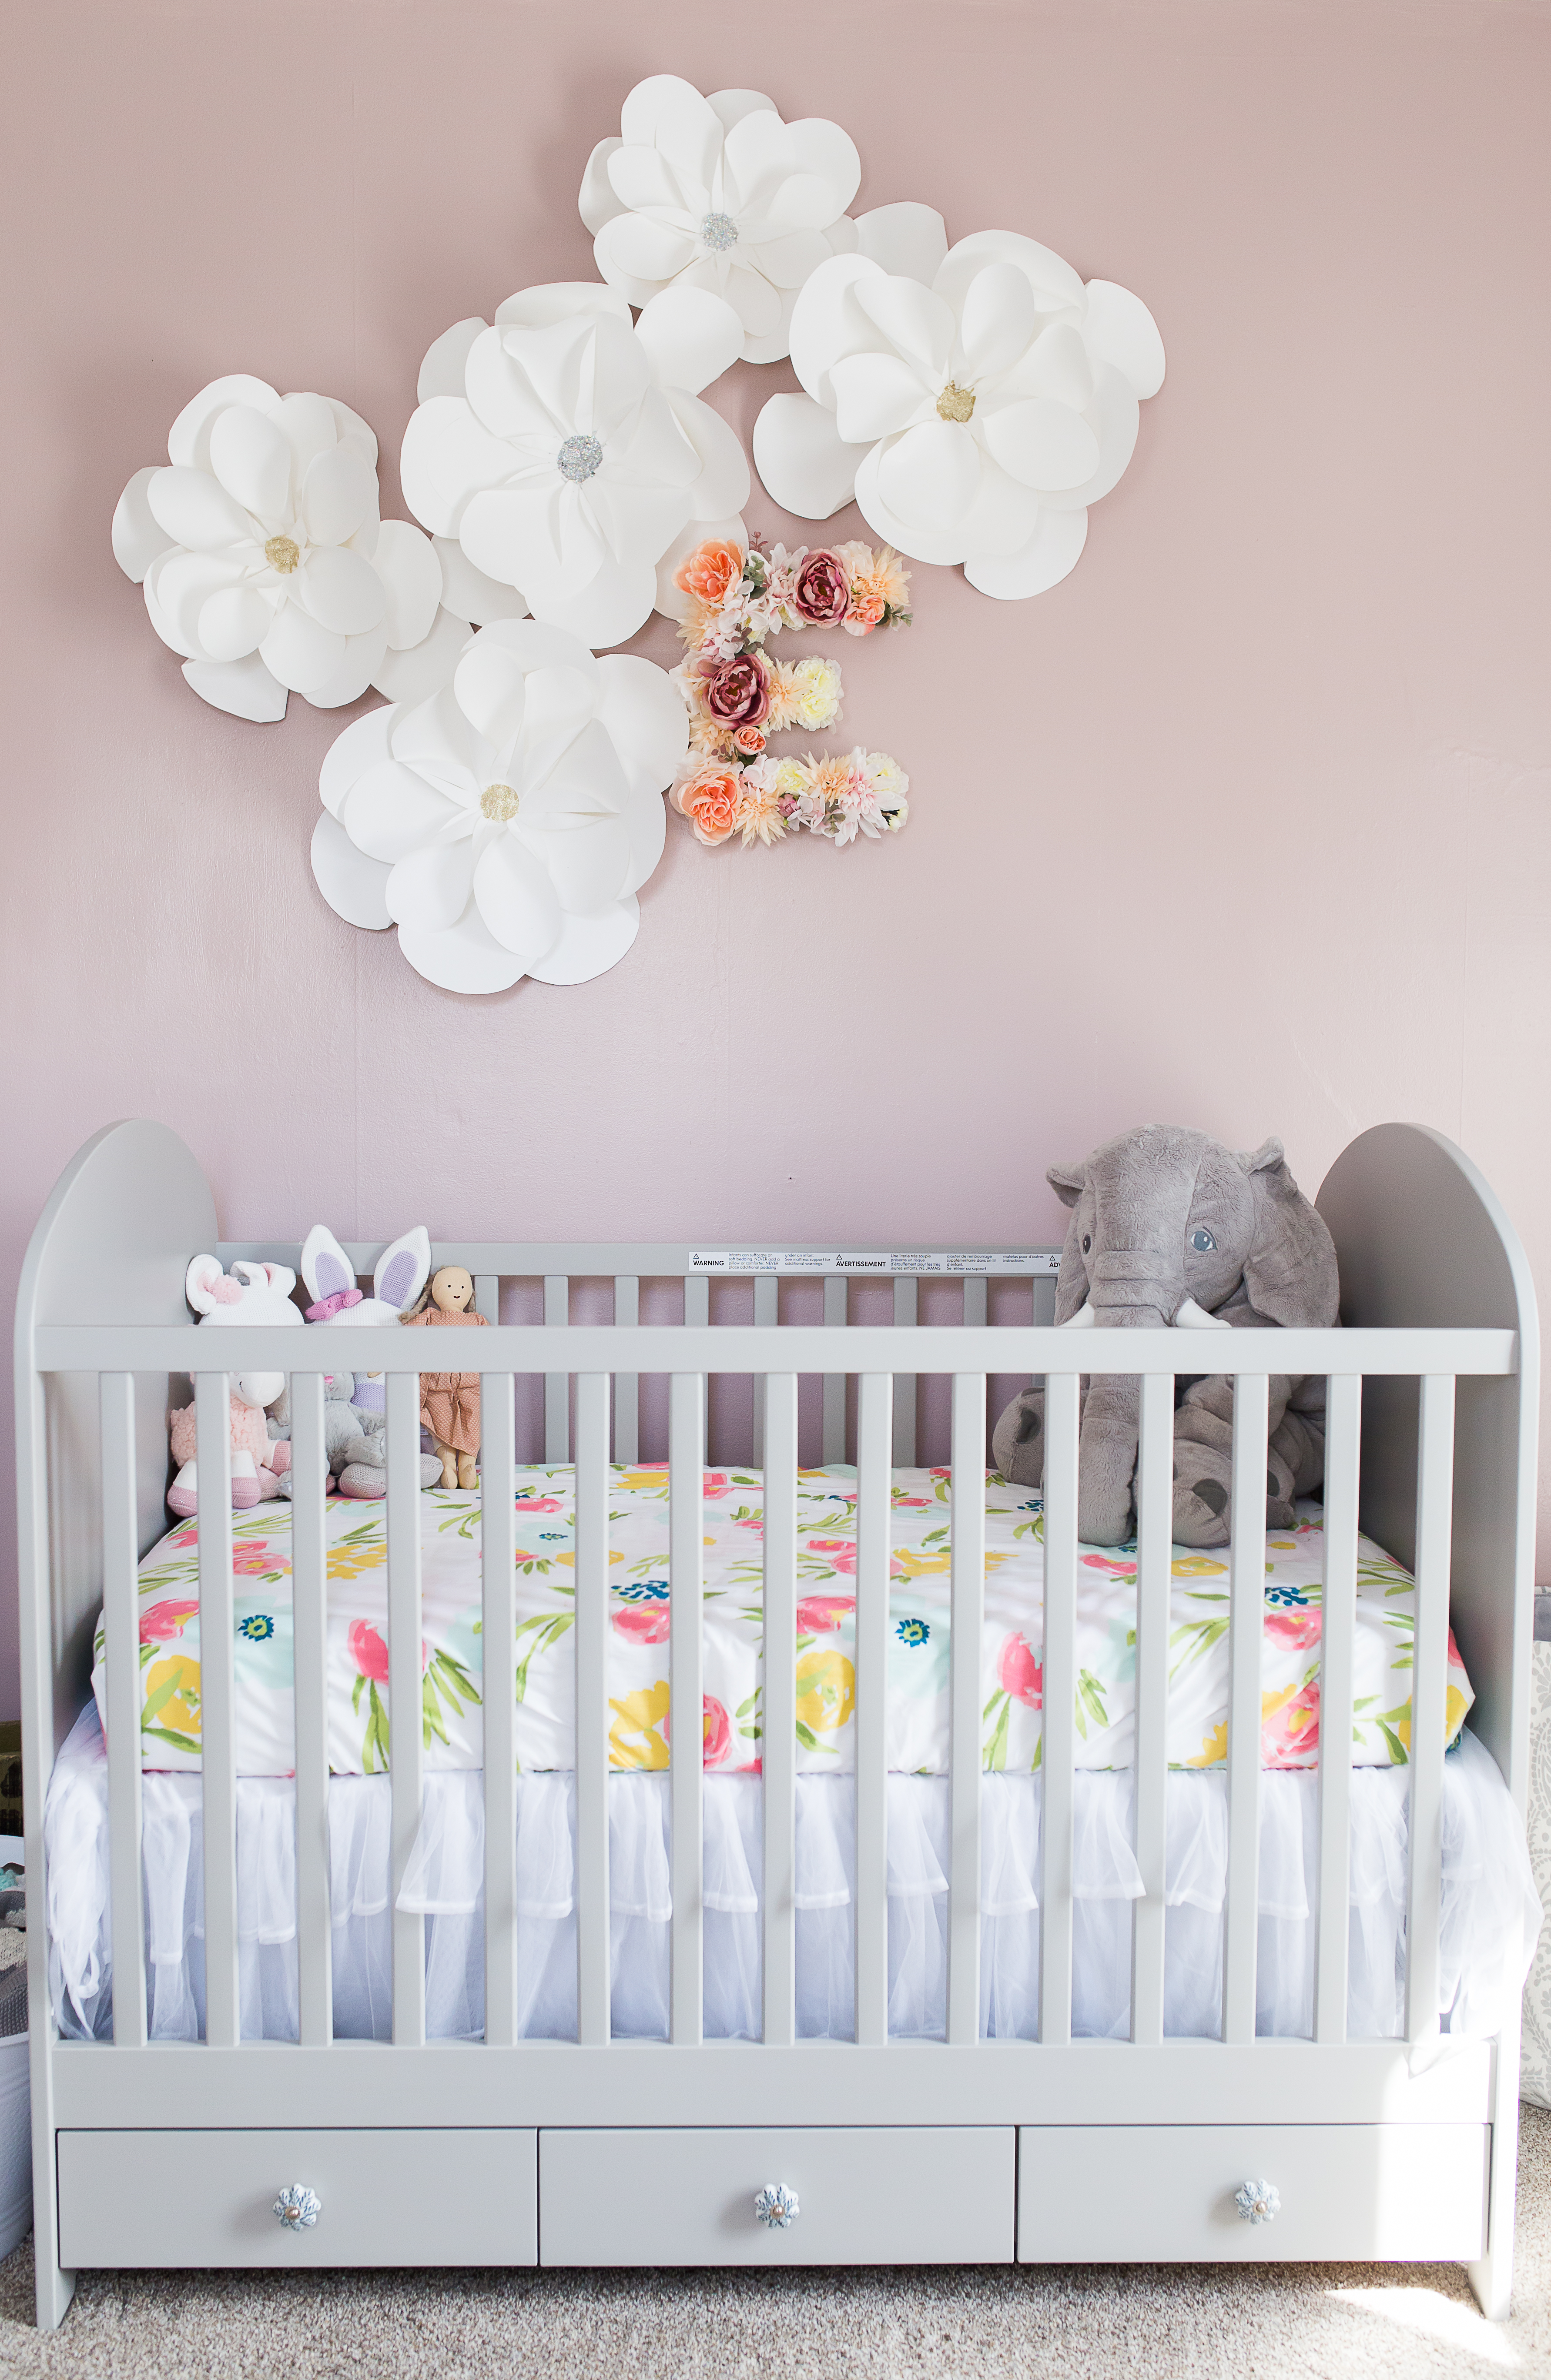 ikea, crib, grey, target, crib sheets, wall flowers, paper flowers, floral initial, elephant, stuffed animals, doll